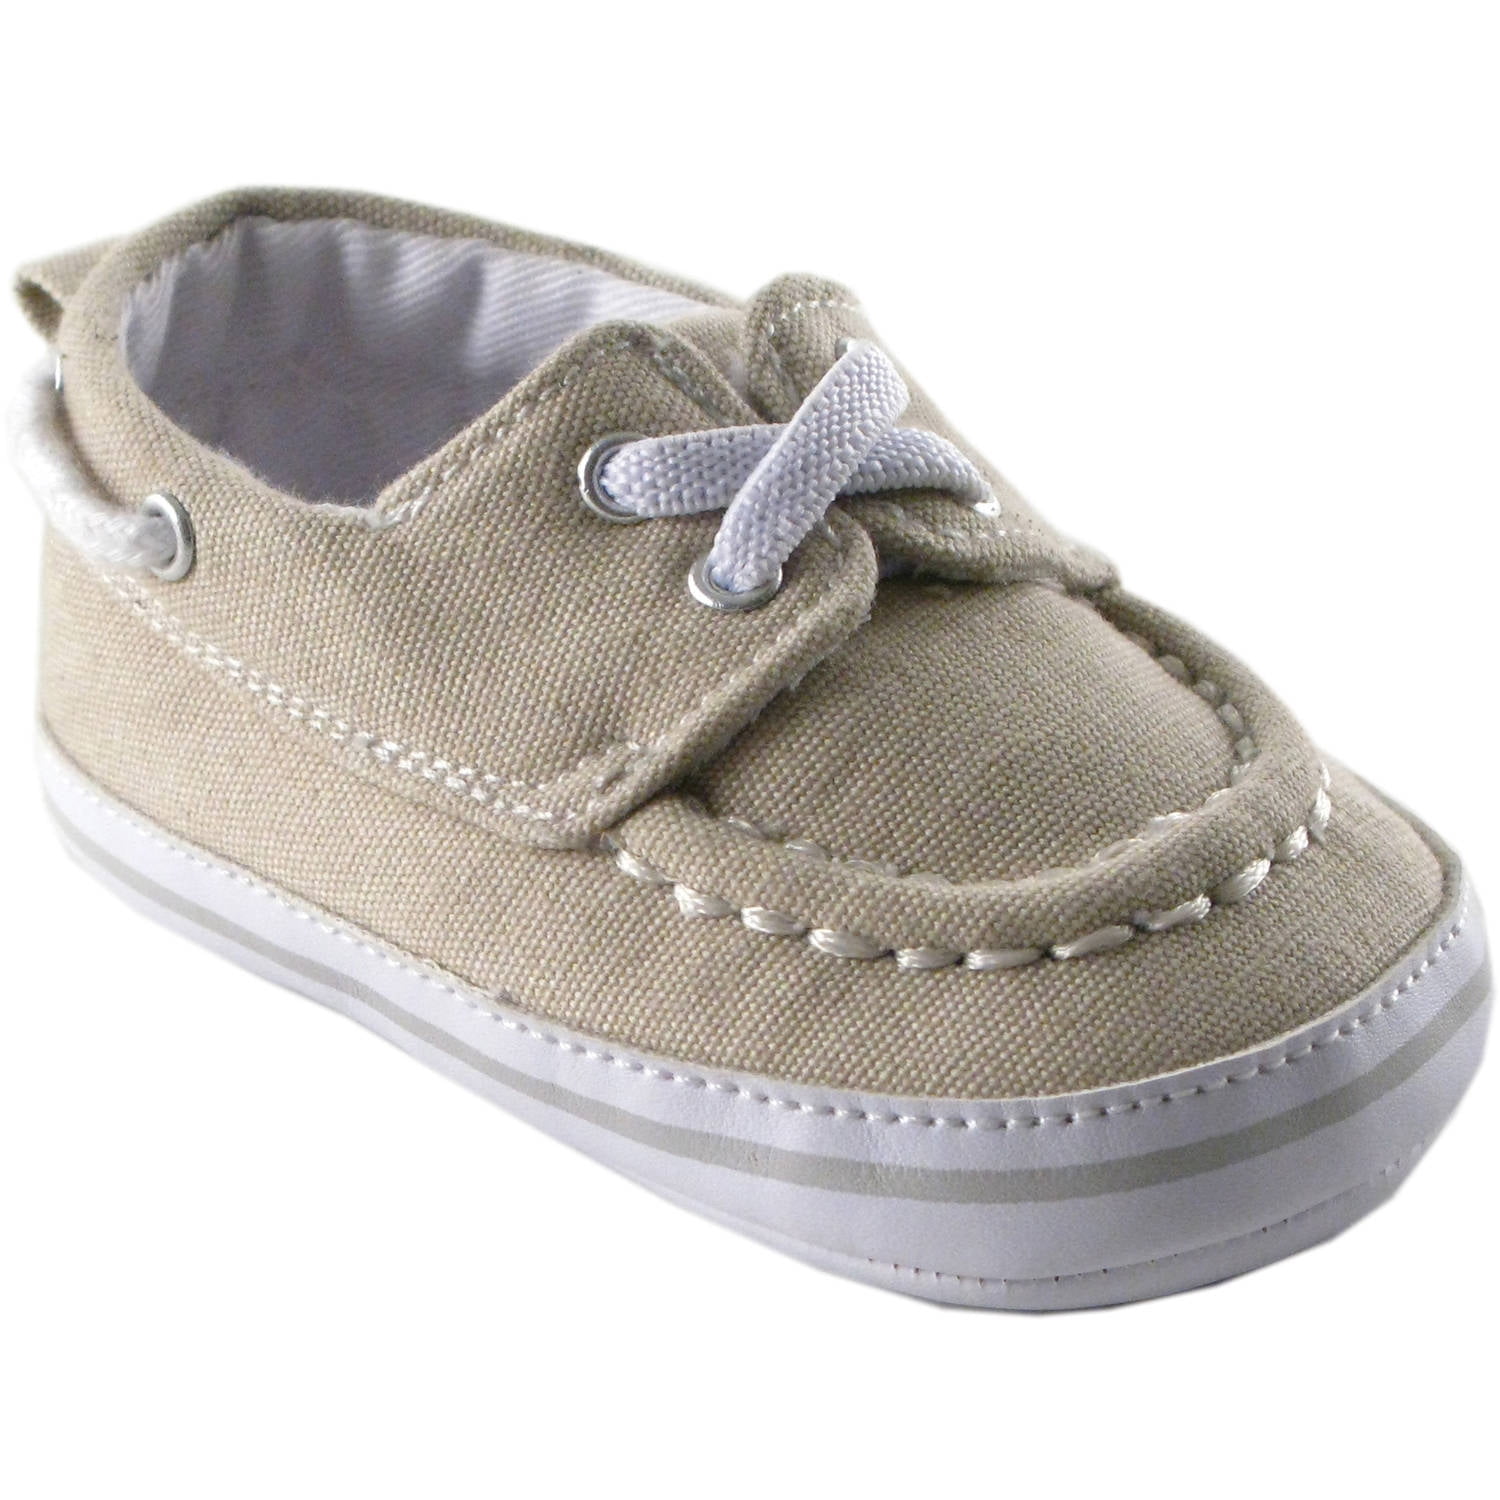 newborn shoes walmart